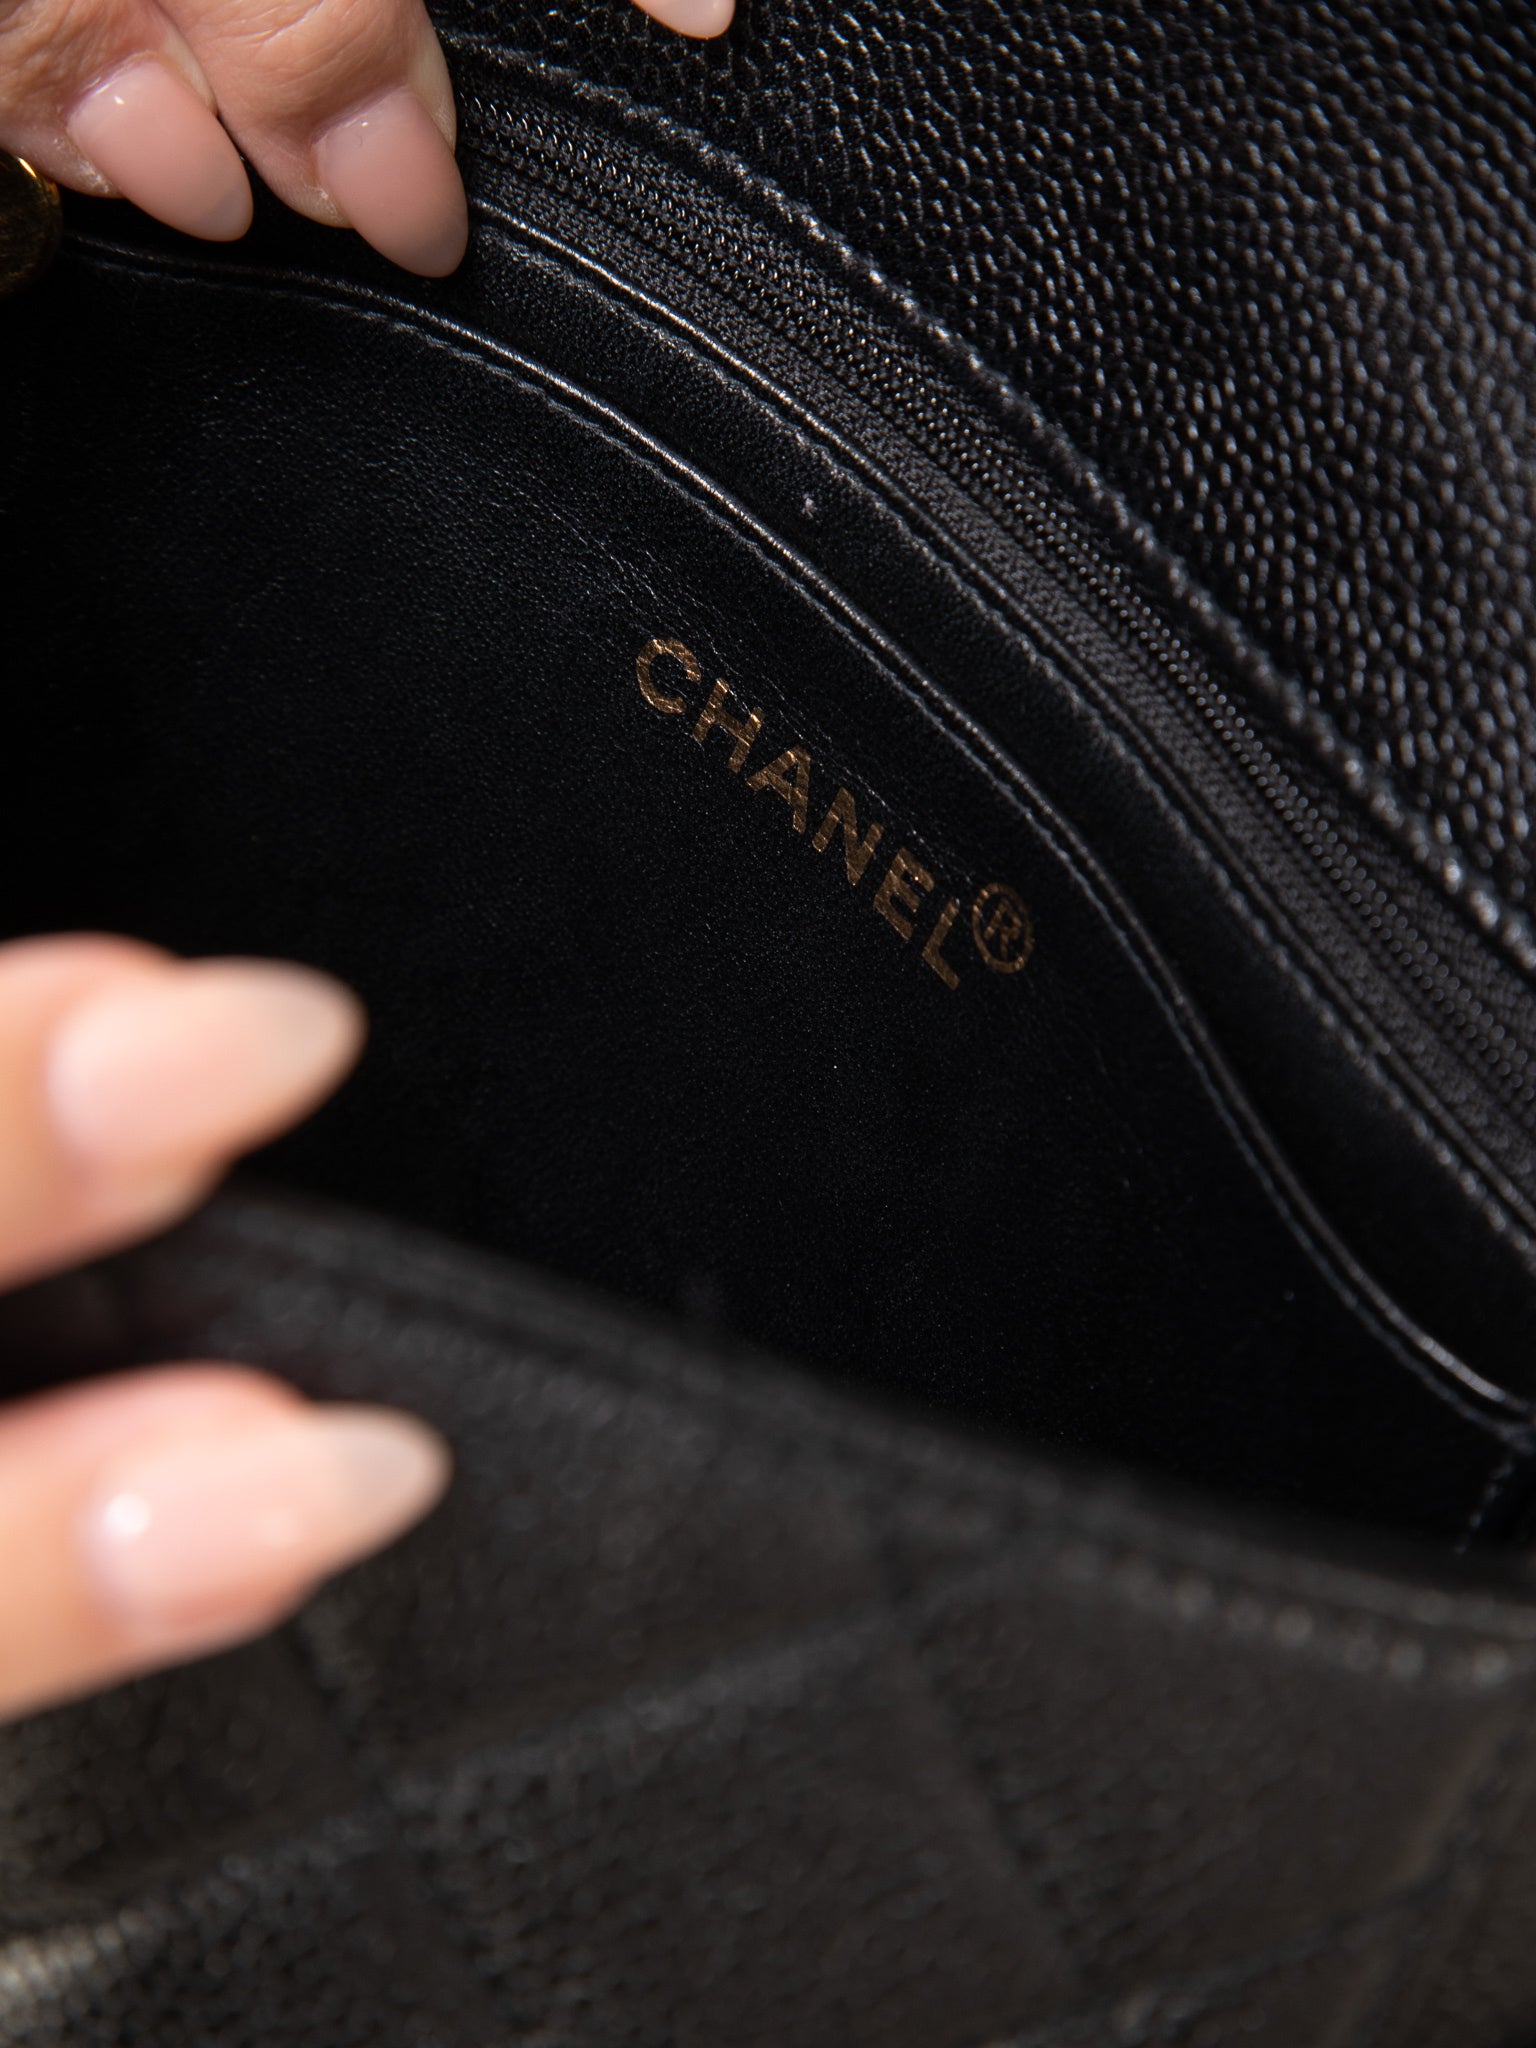 Chanel Caviar Turnlock Shoulder Bag